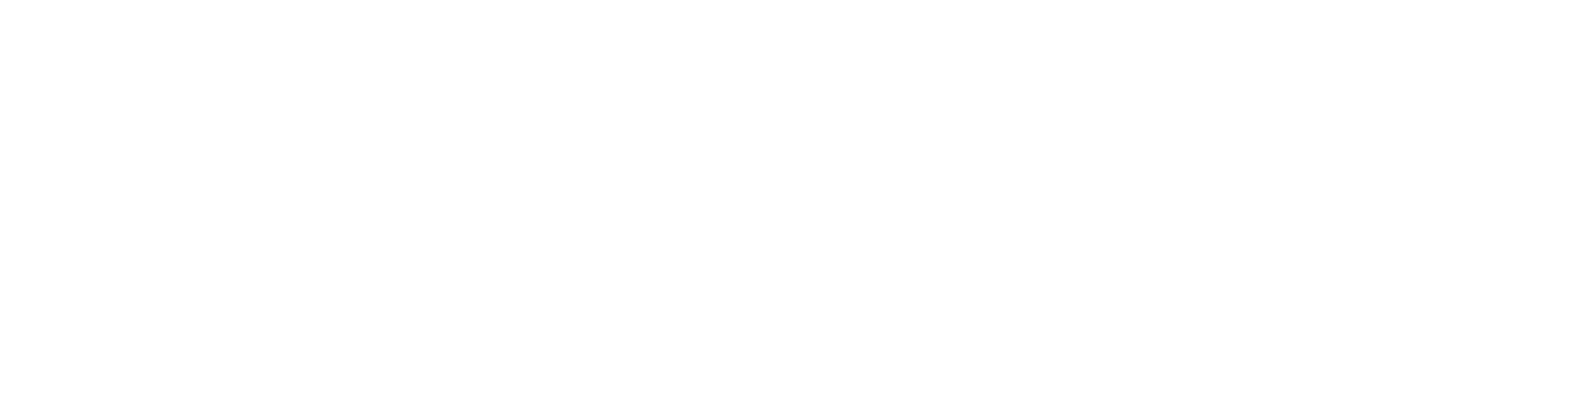 Xencor logo large for dark backgrounds (transparent PNG)